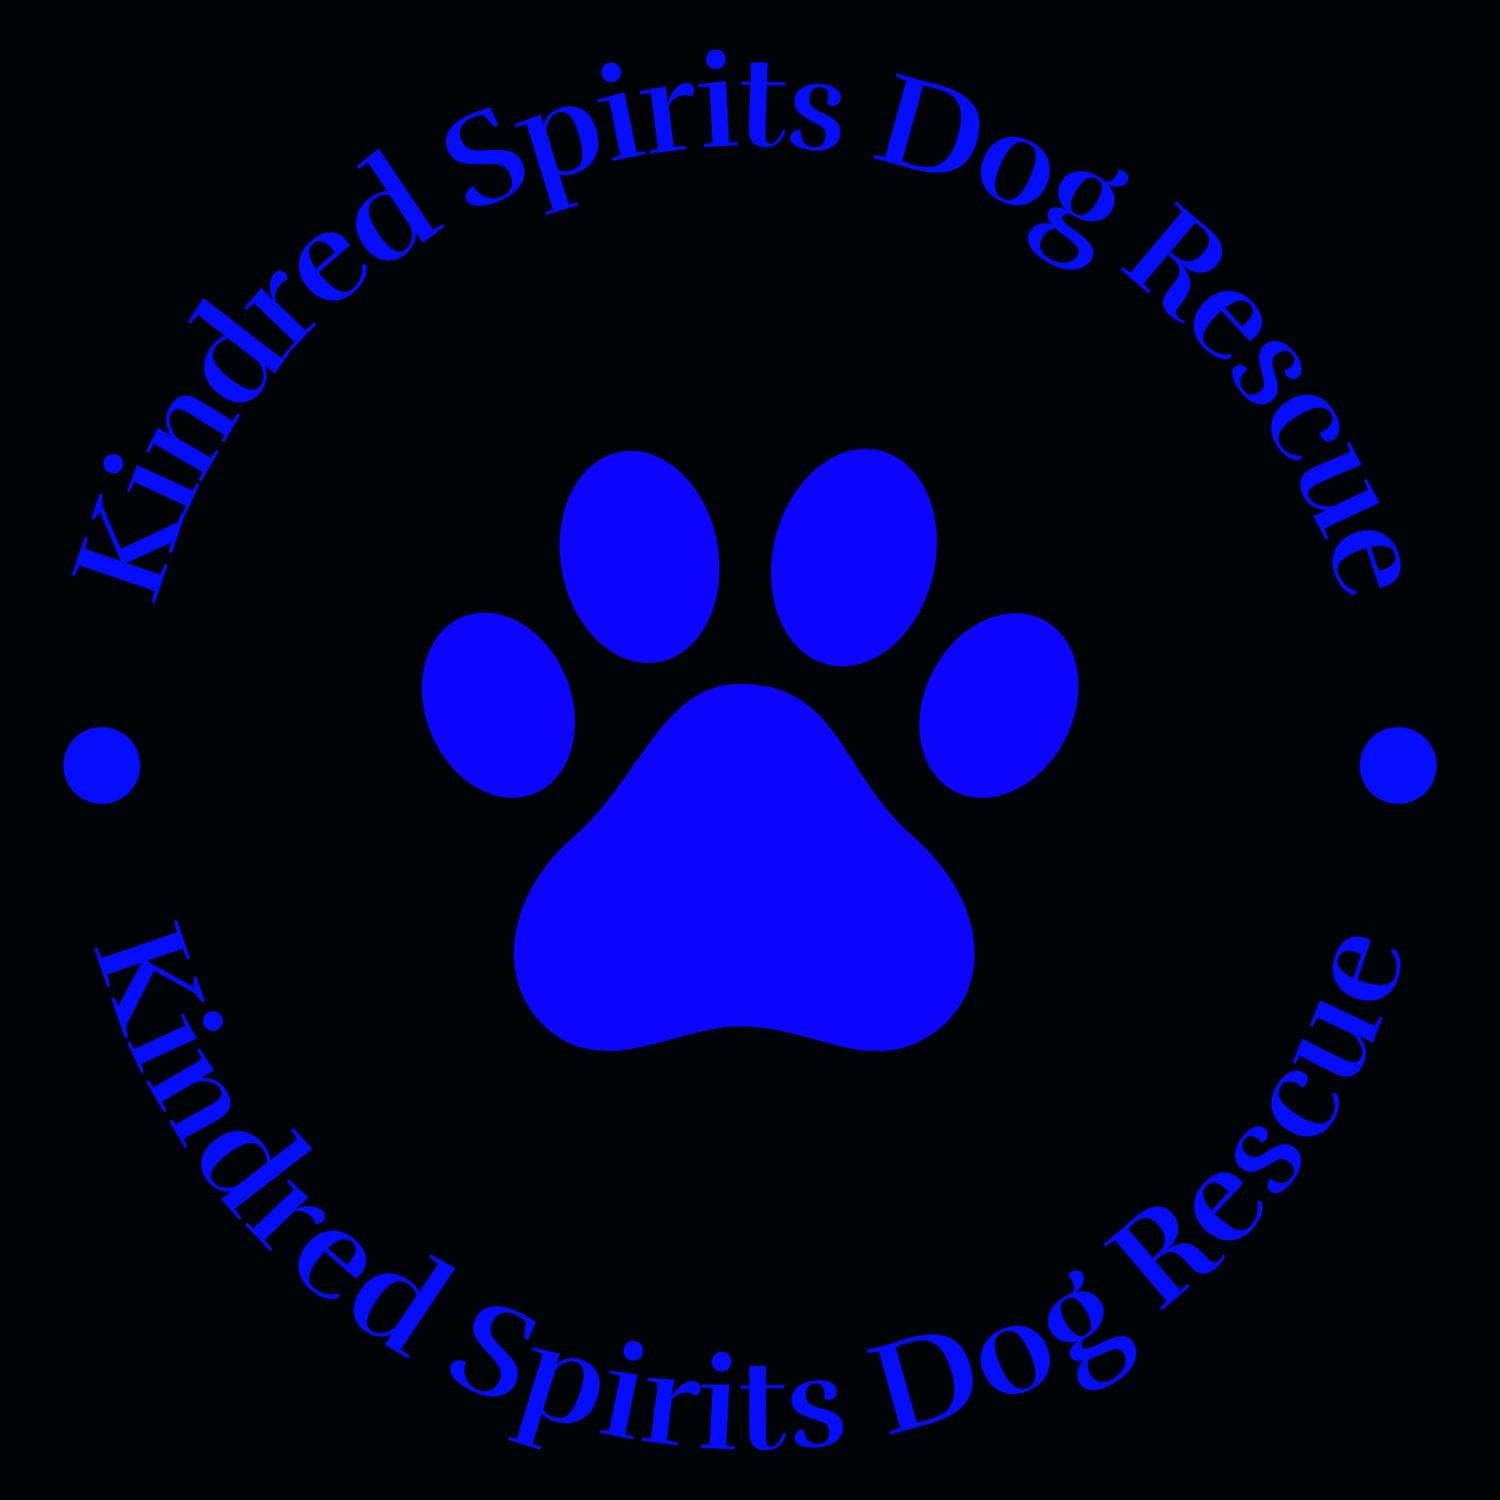 Kindred Spirits Dog Sanctuary & Rescue